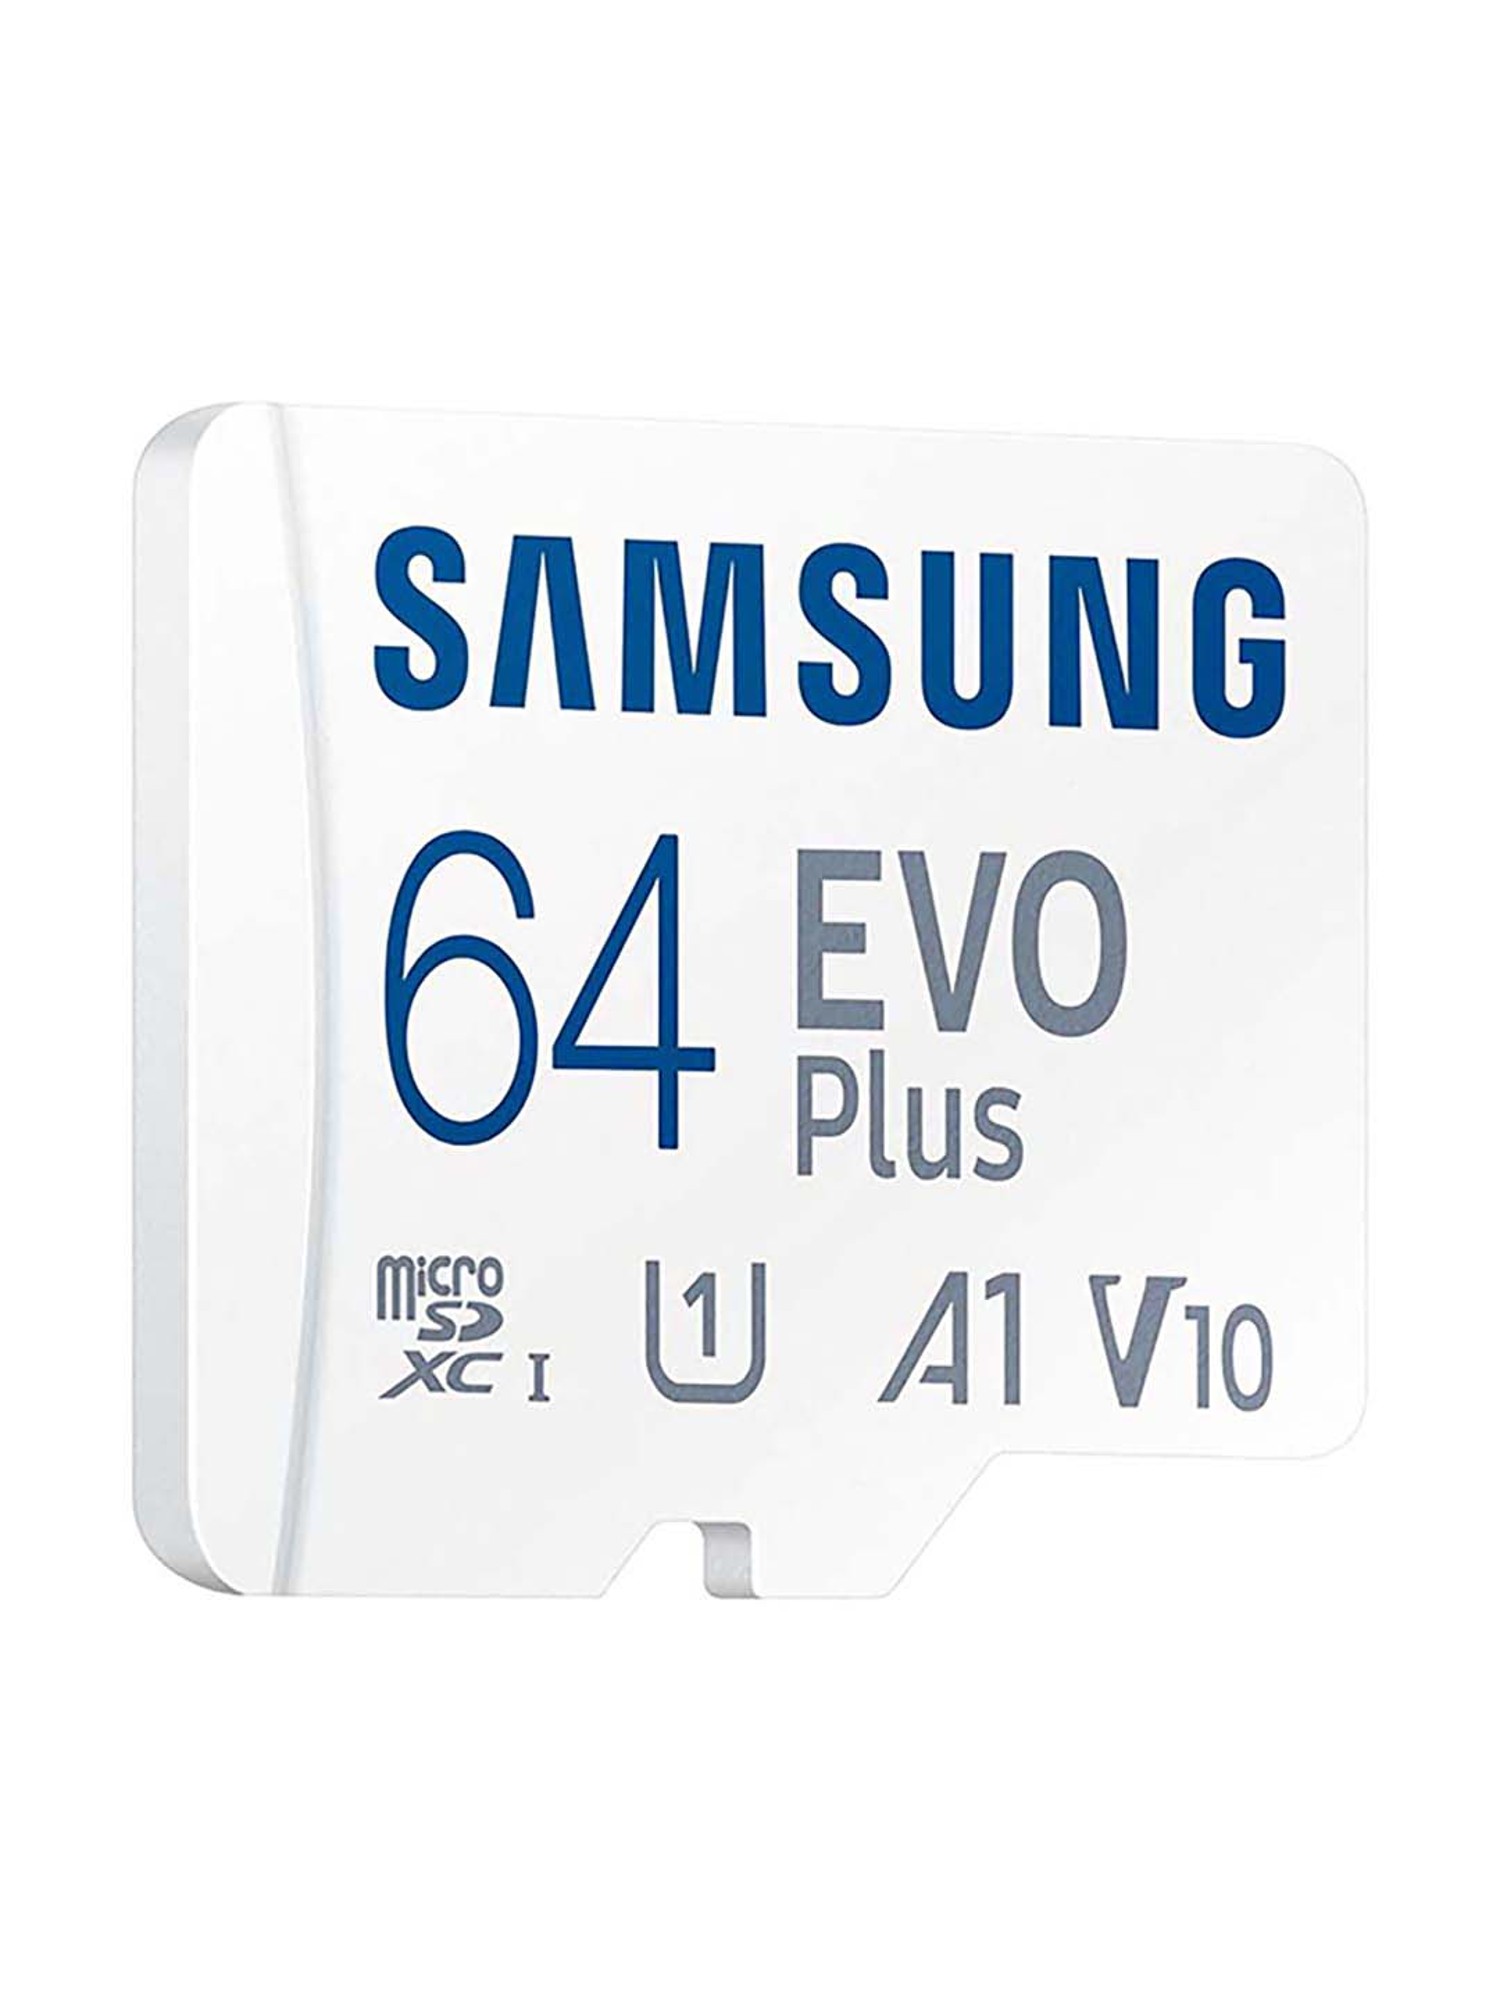 Samsung Evo plus 64GB microSD SDXC U1 class 10 A1 memory card 130MB/S Adapter 2021 